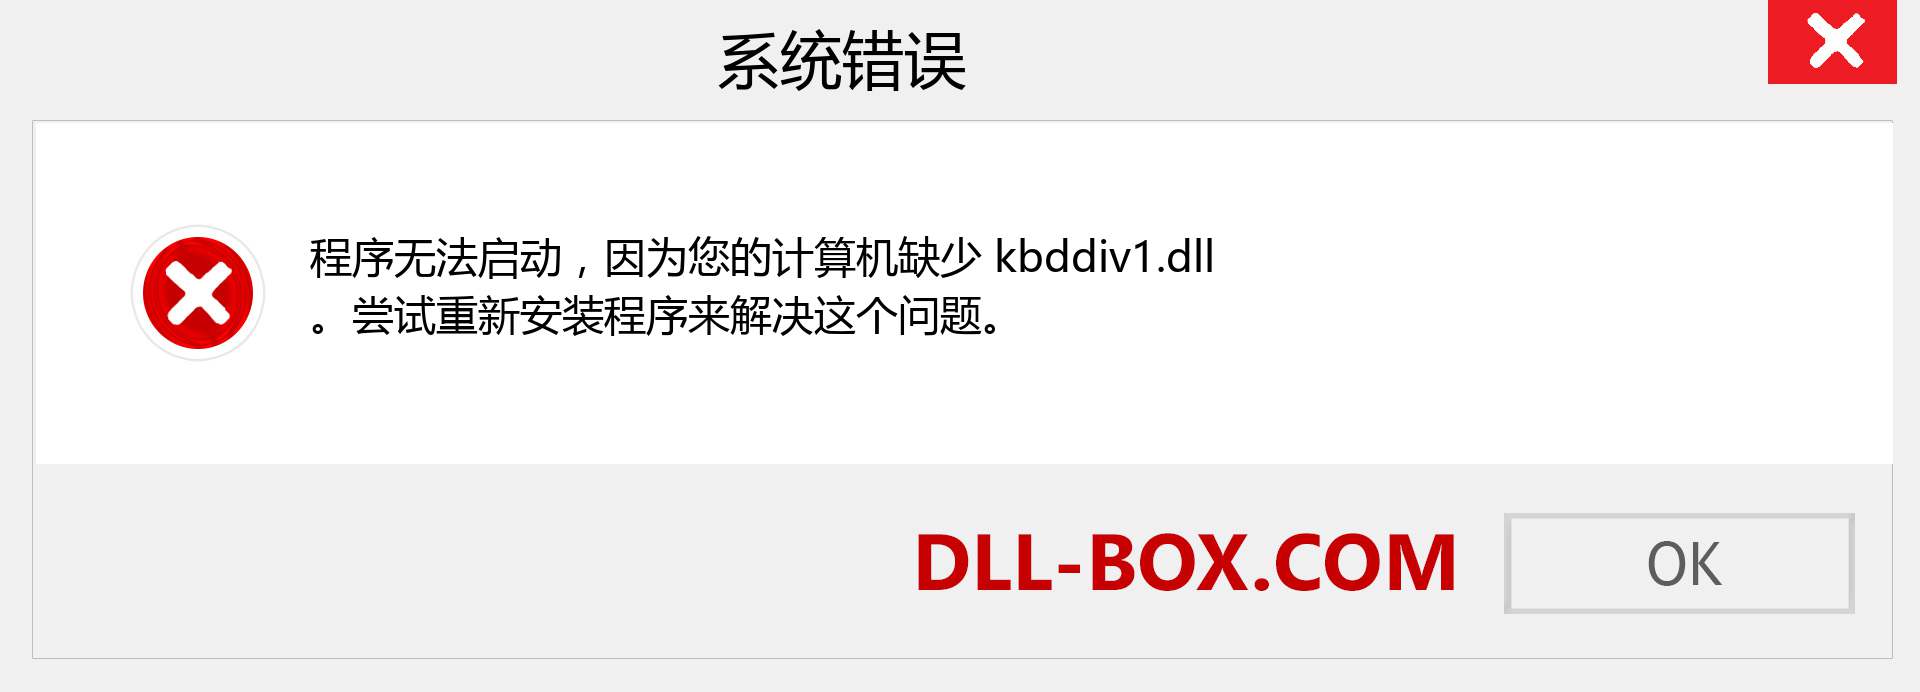 kbddiv1.dll 文件丢失？。 适用于 Windows 7、8、10 的下载 - 修复 Windows、照片、图像上的 kbddiv1 dll 丢失错误